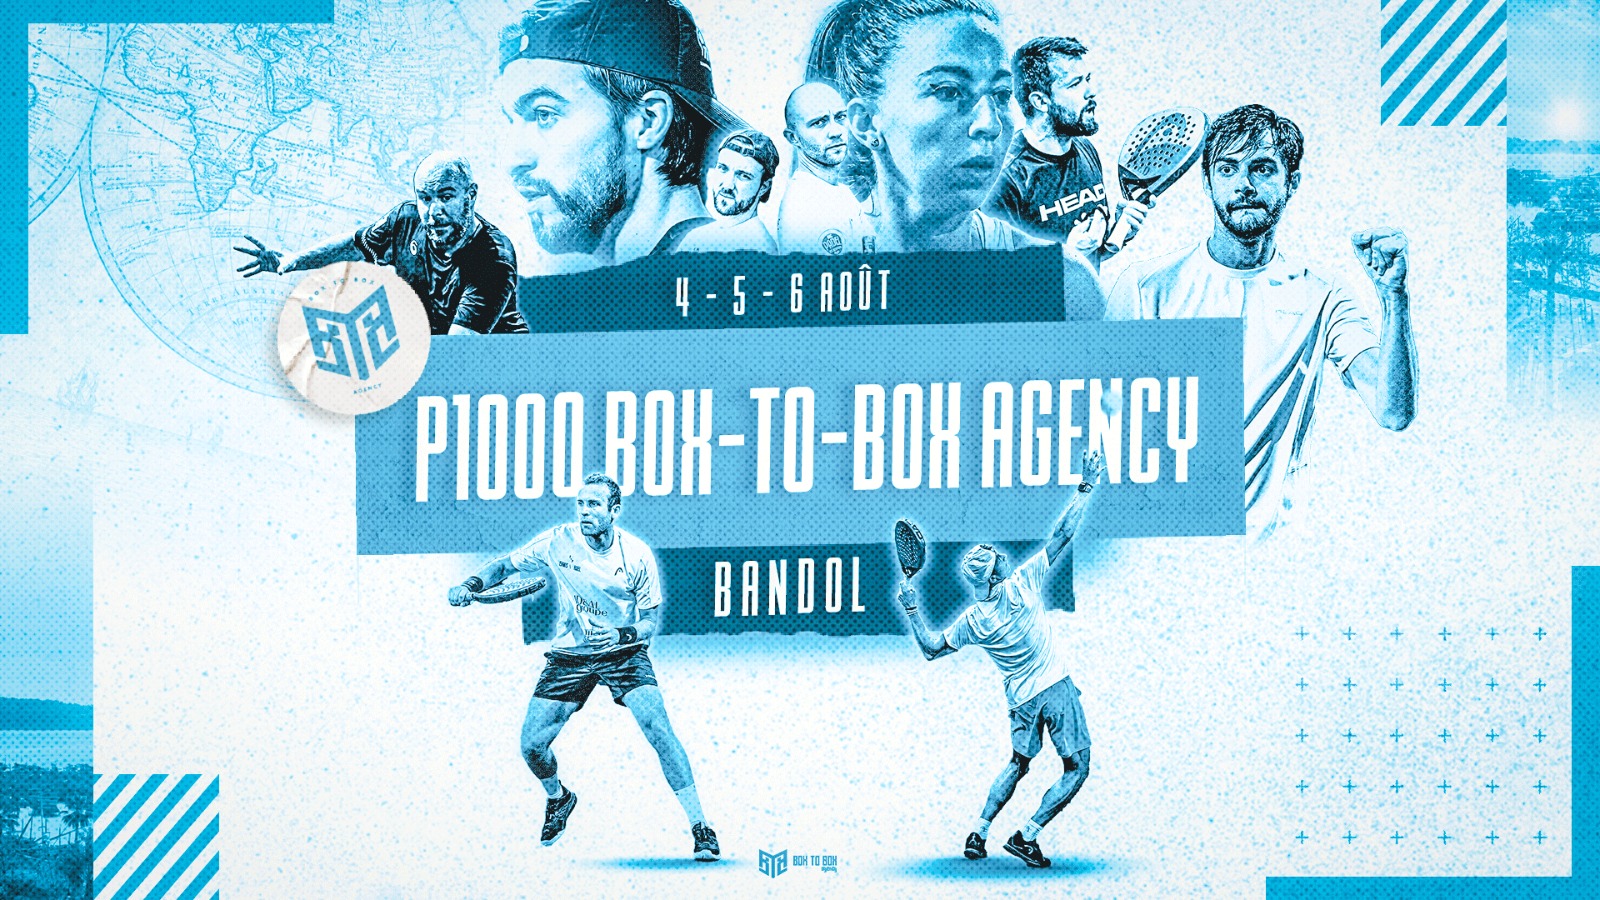 Open P1000 Box-to-Box Agency Finals - Bandol